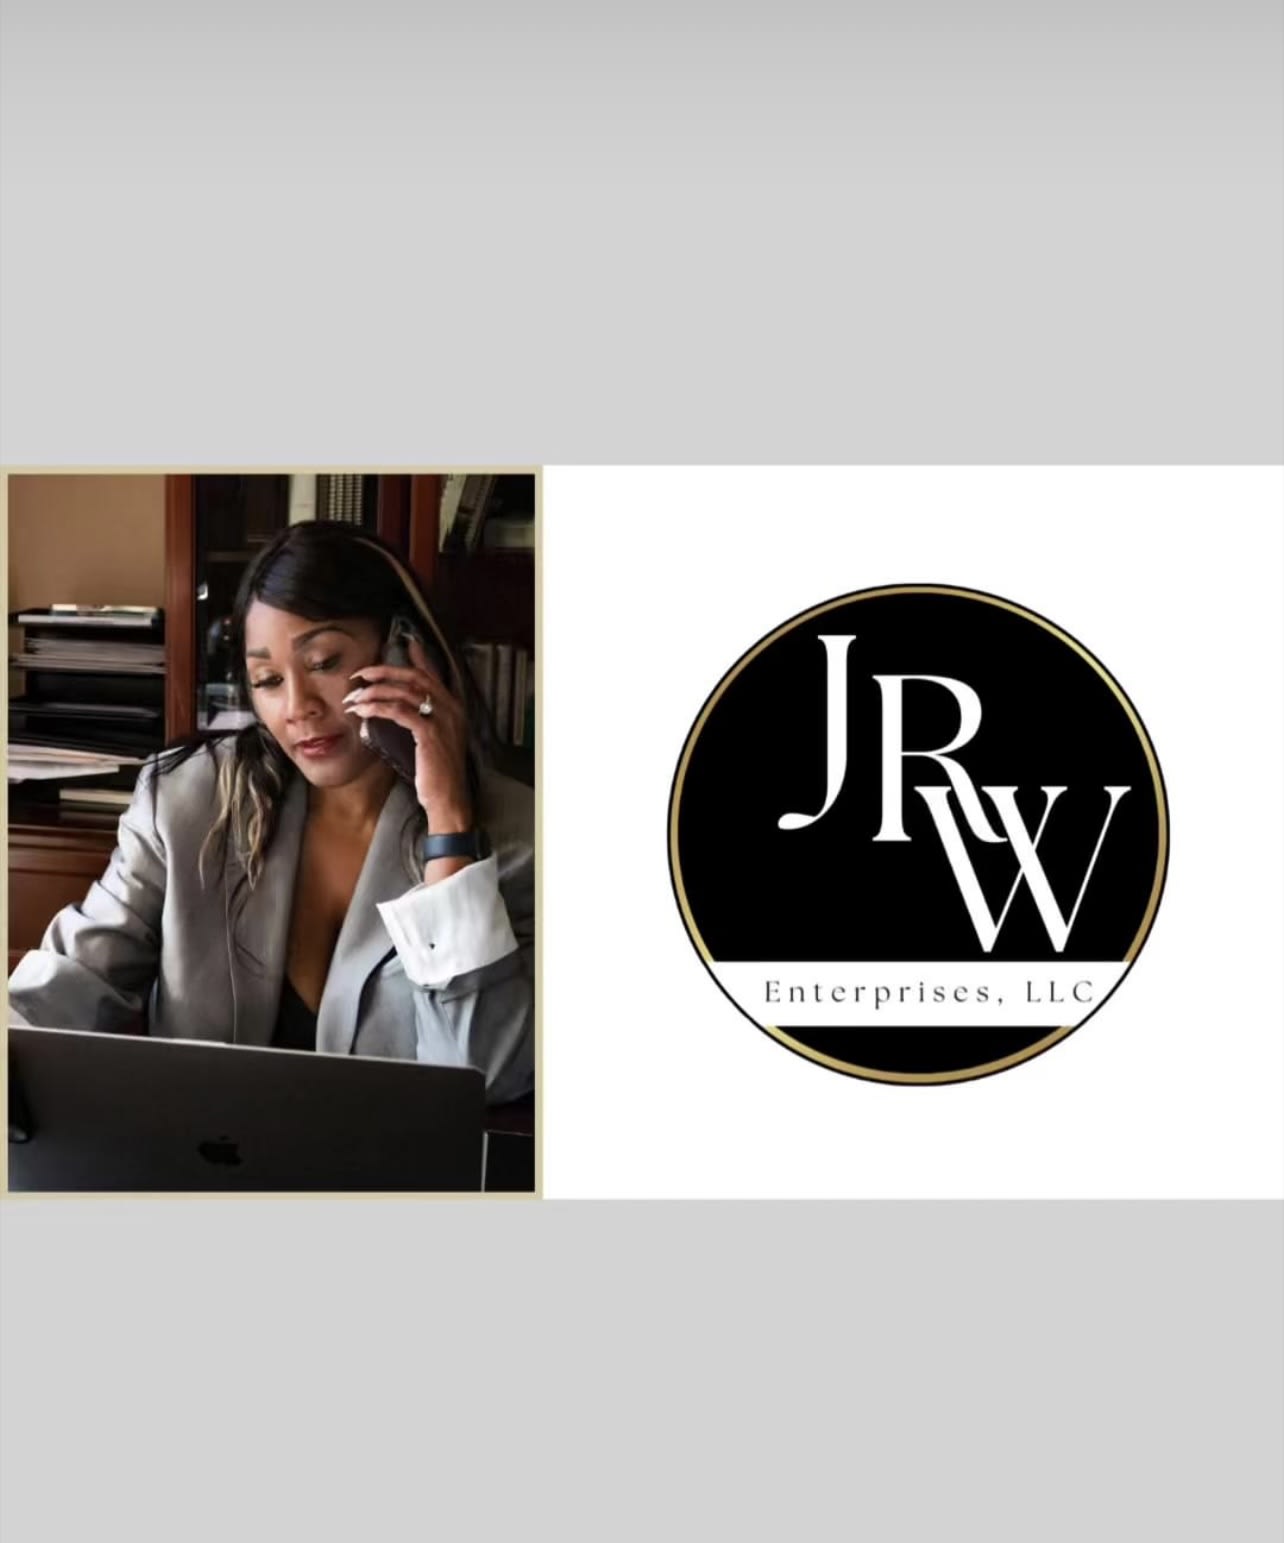 JRW Enterprises, LLC